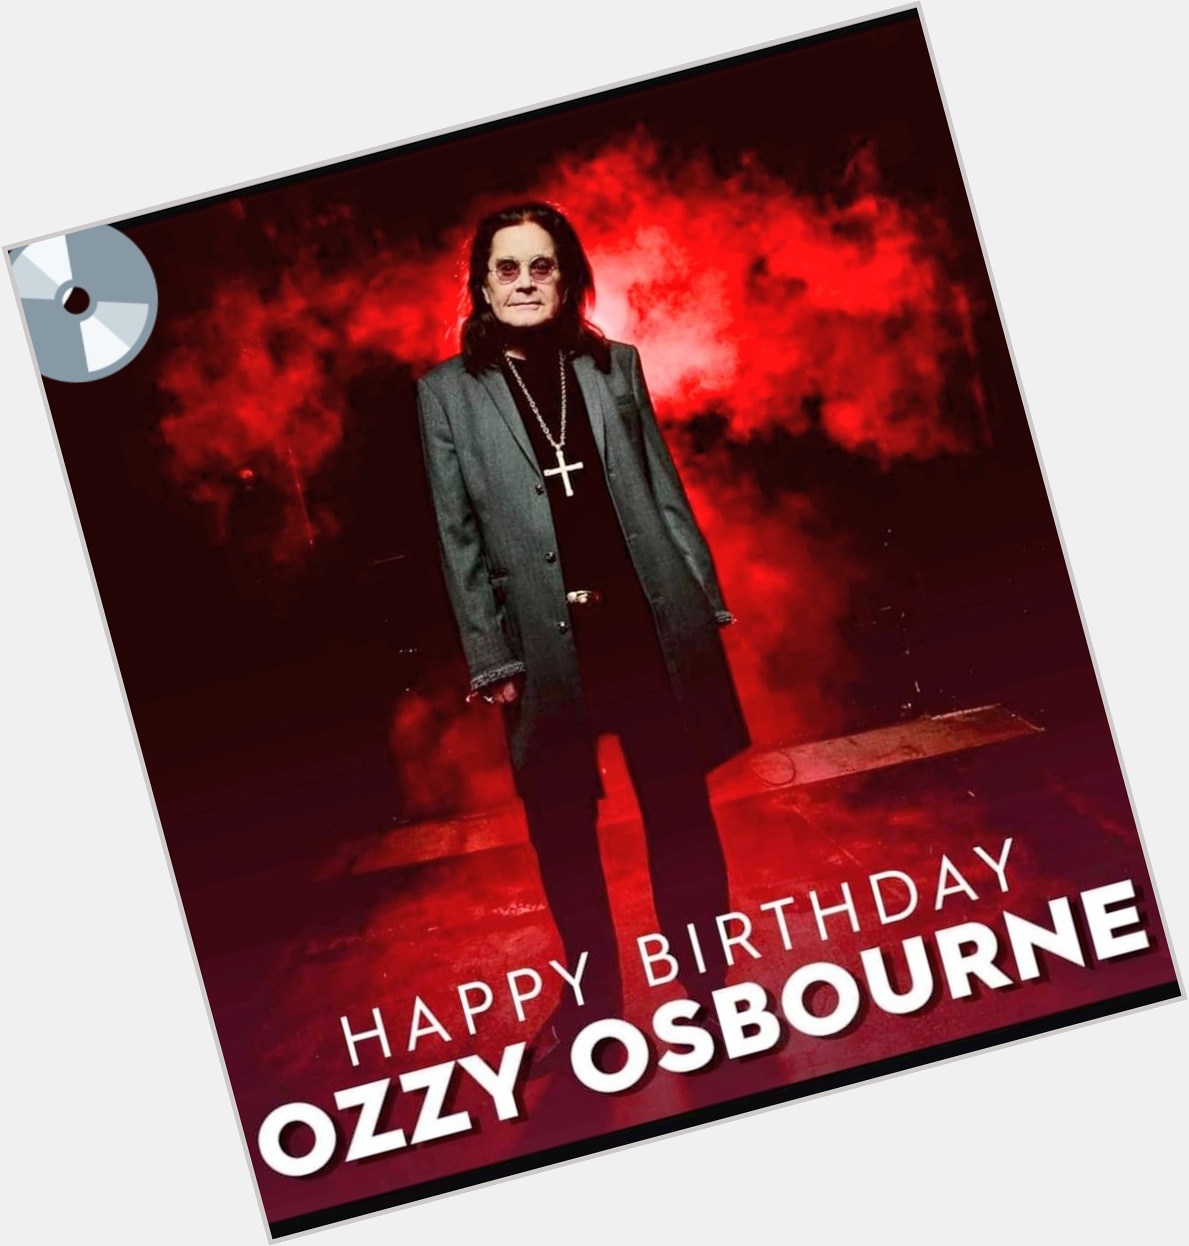 Prince of Darkness  Happy Birthday  \"Ozzy\" Osbourne   73 December 3, 1948 